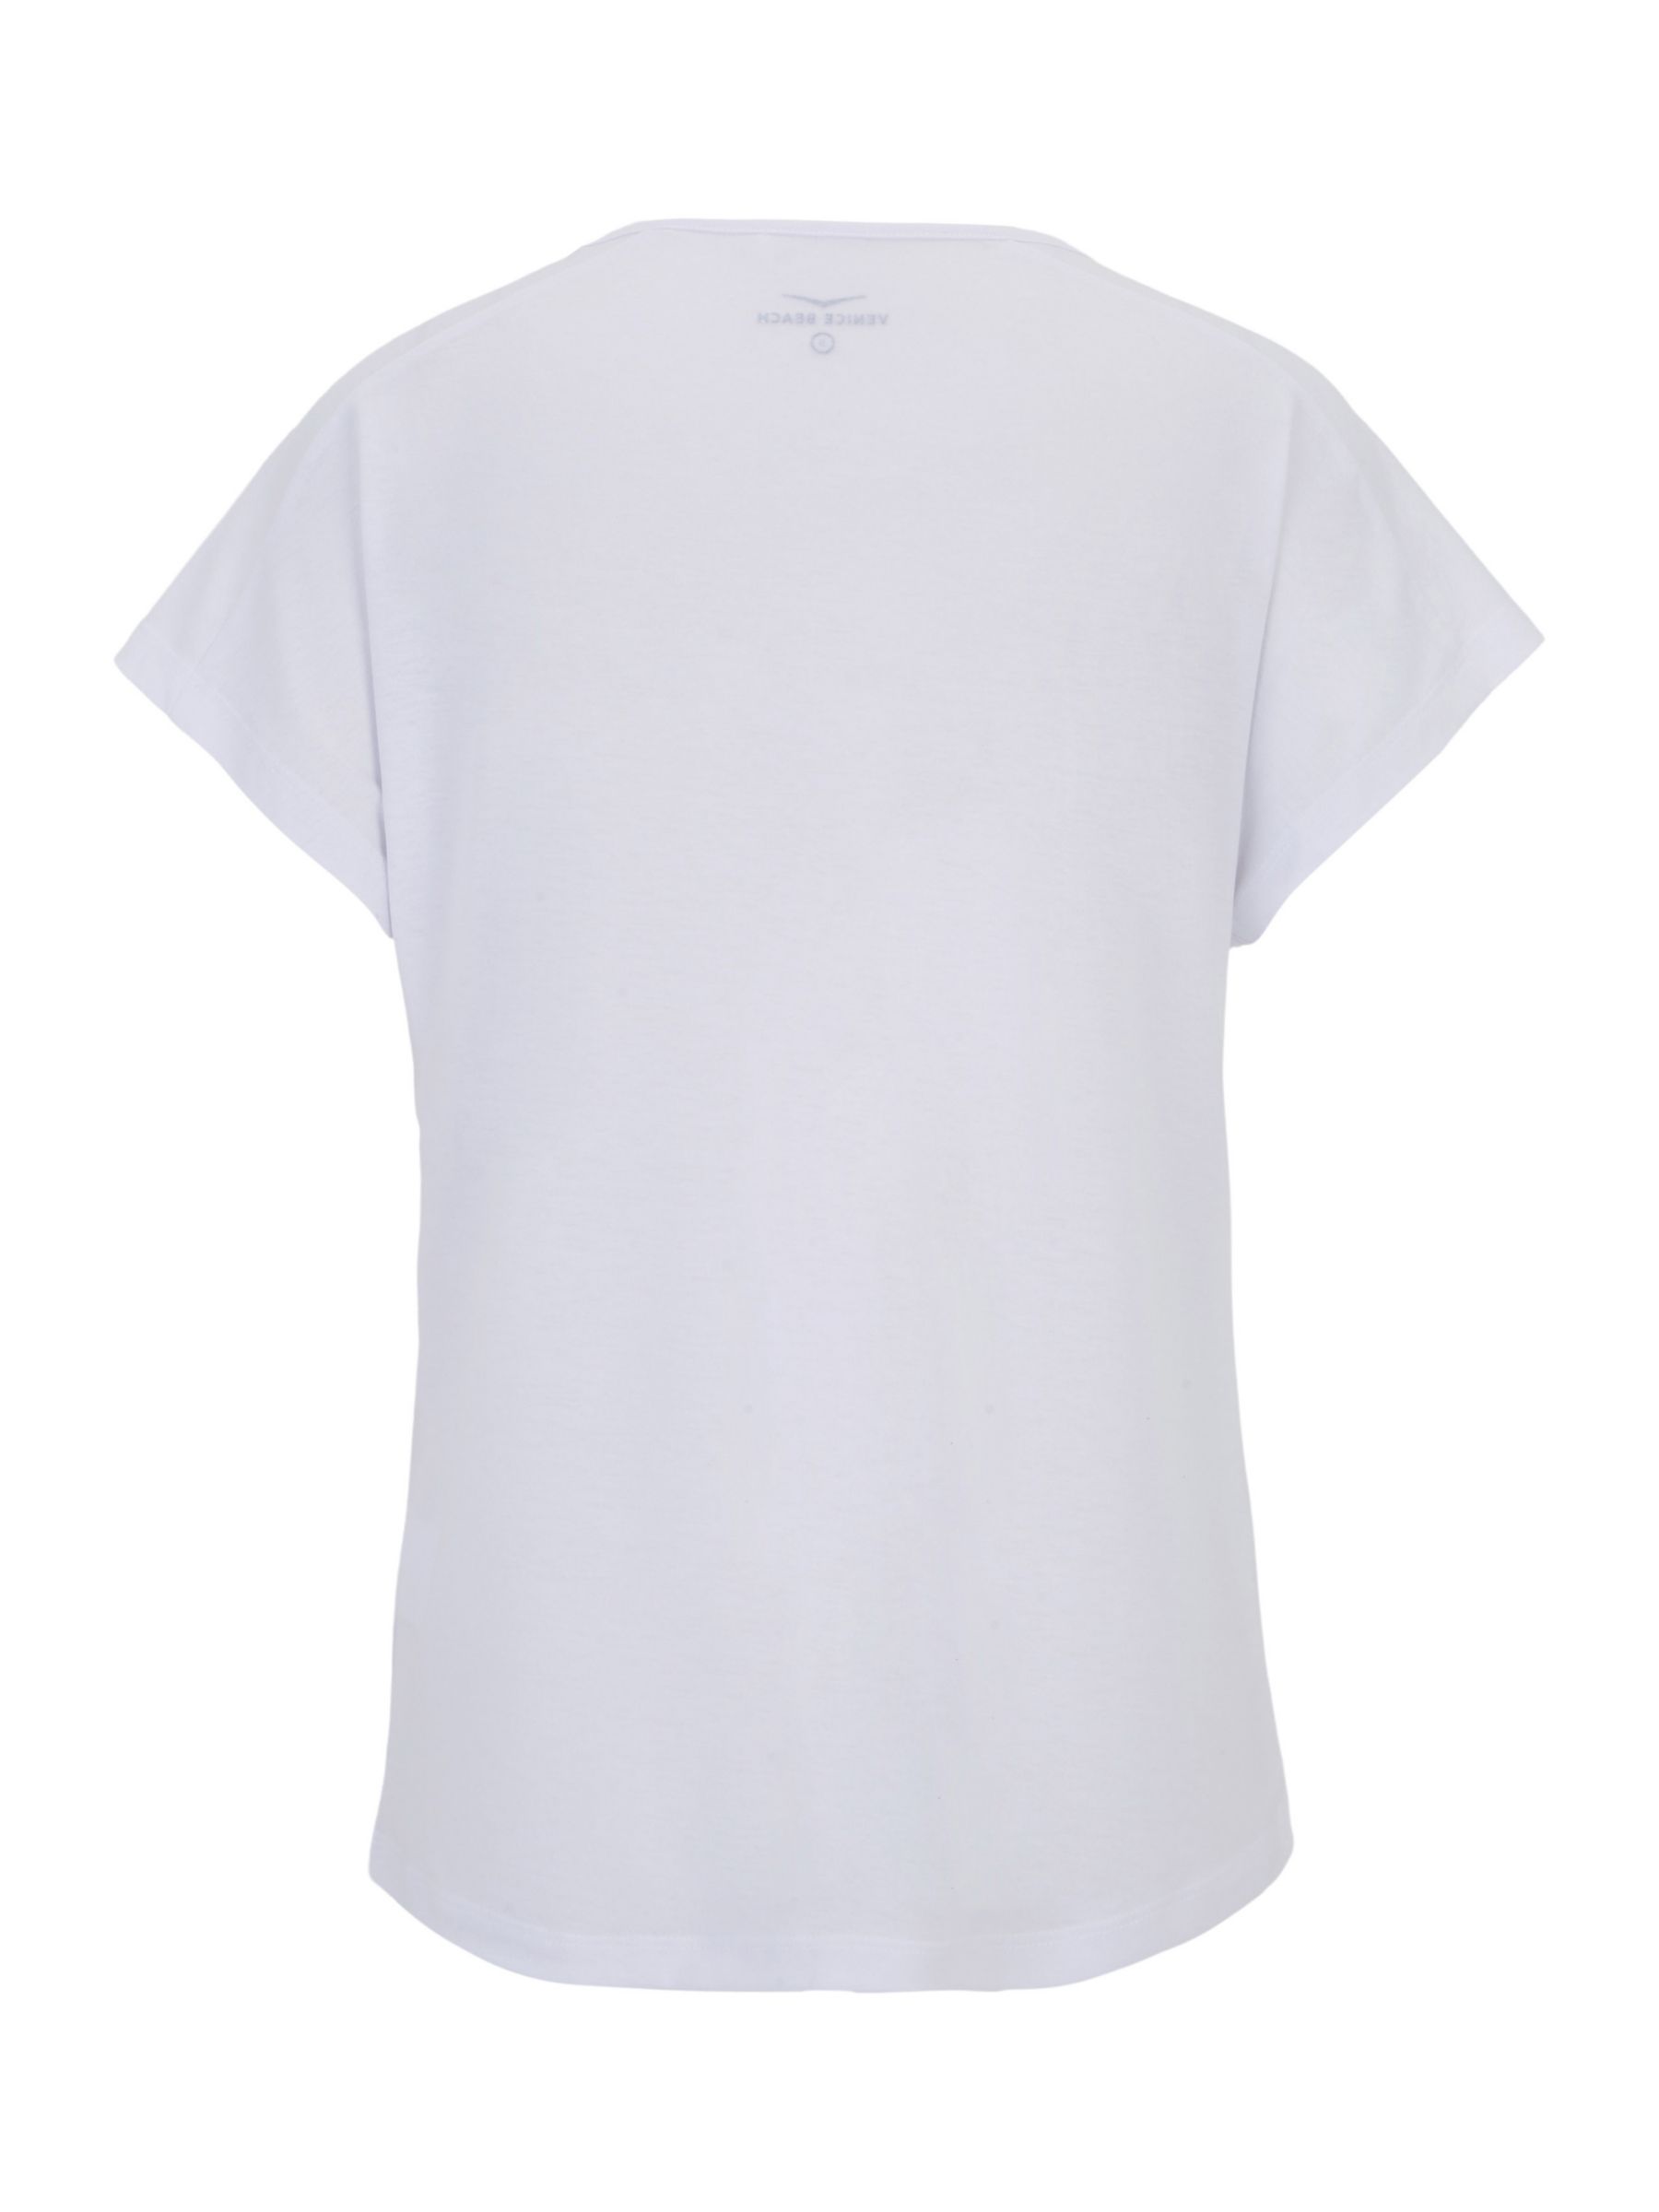 Buy Venice Beach Tia T-Shirt, White/Multi Online at johnlewis.com